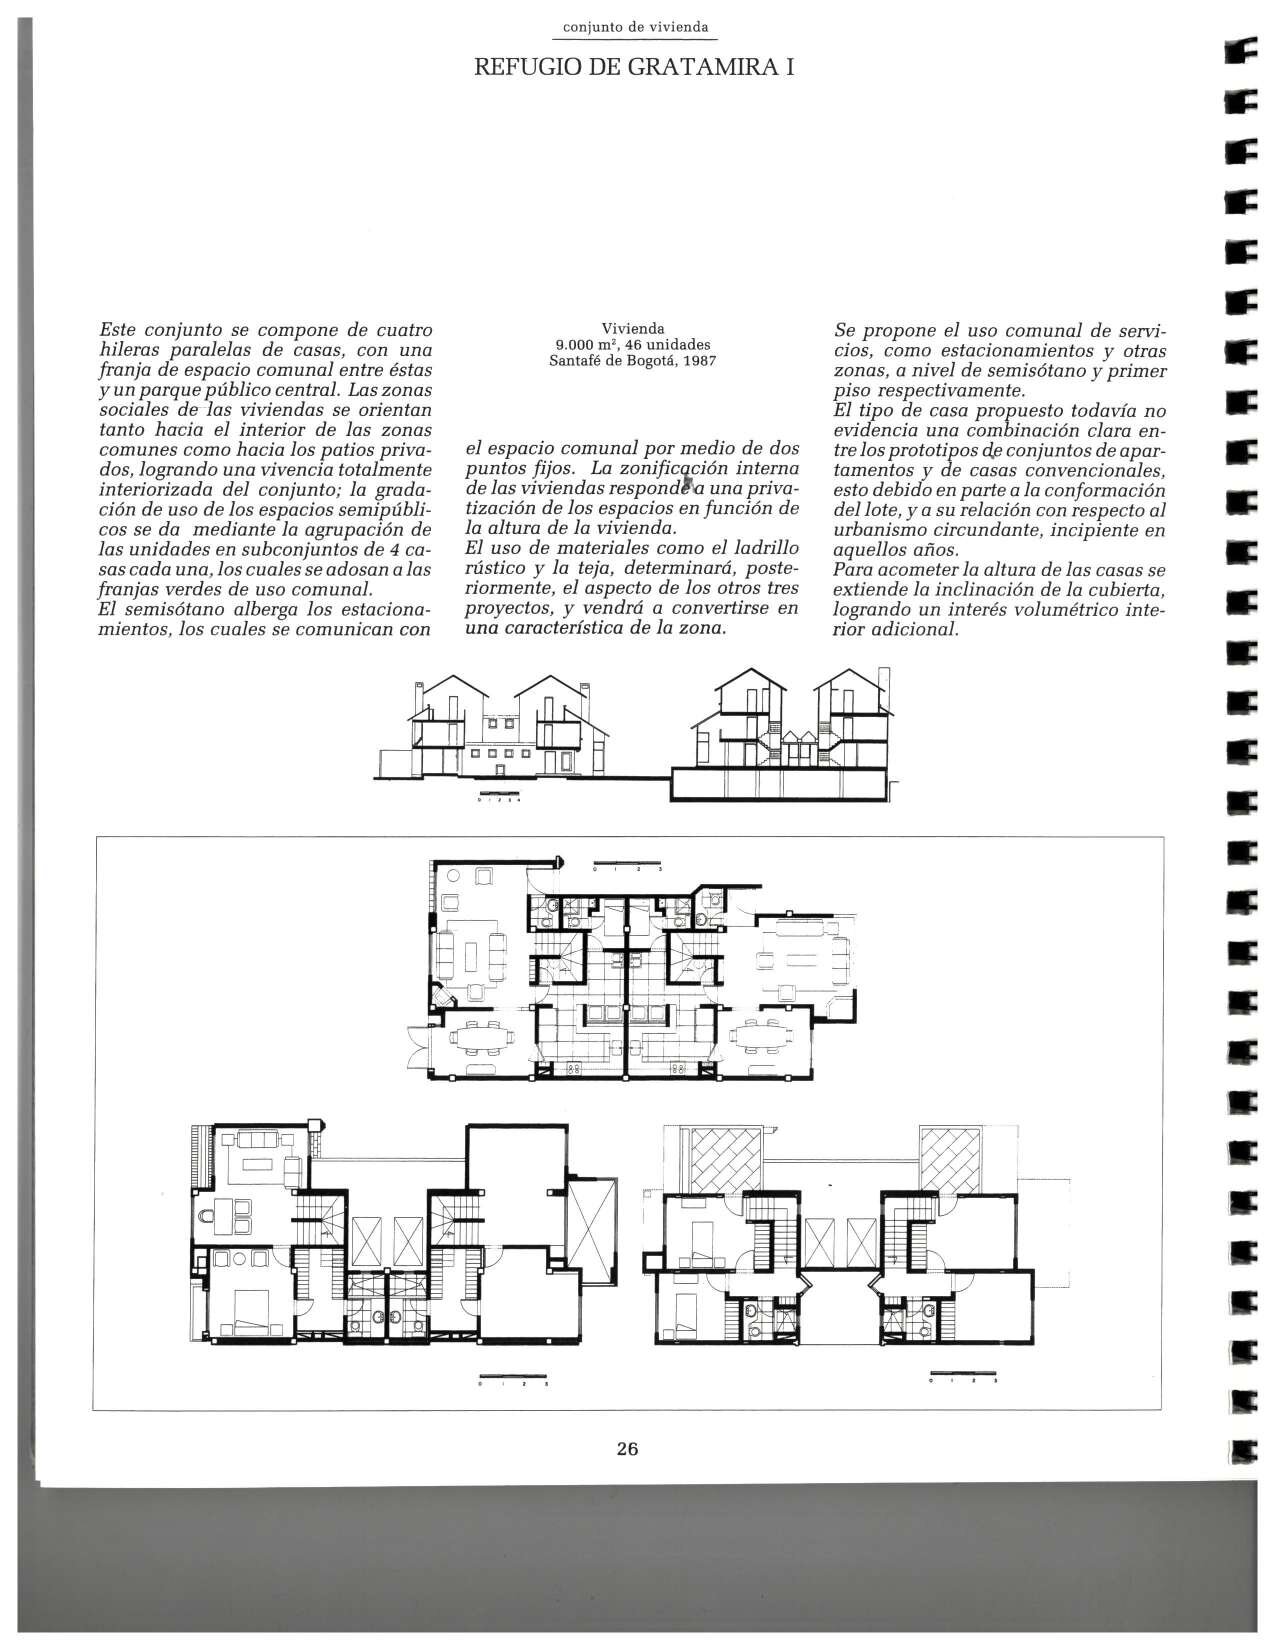 1995_Obra Contexto Urbano_Revista PROA_compressed_page-0026.jpg